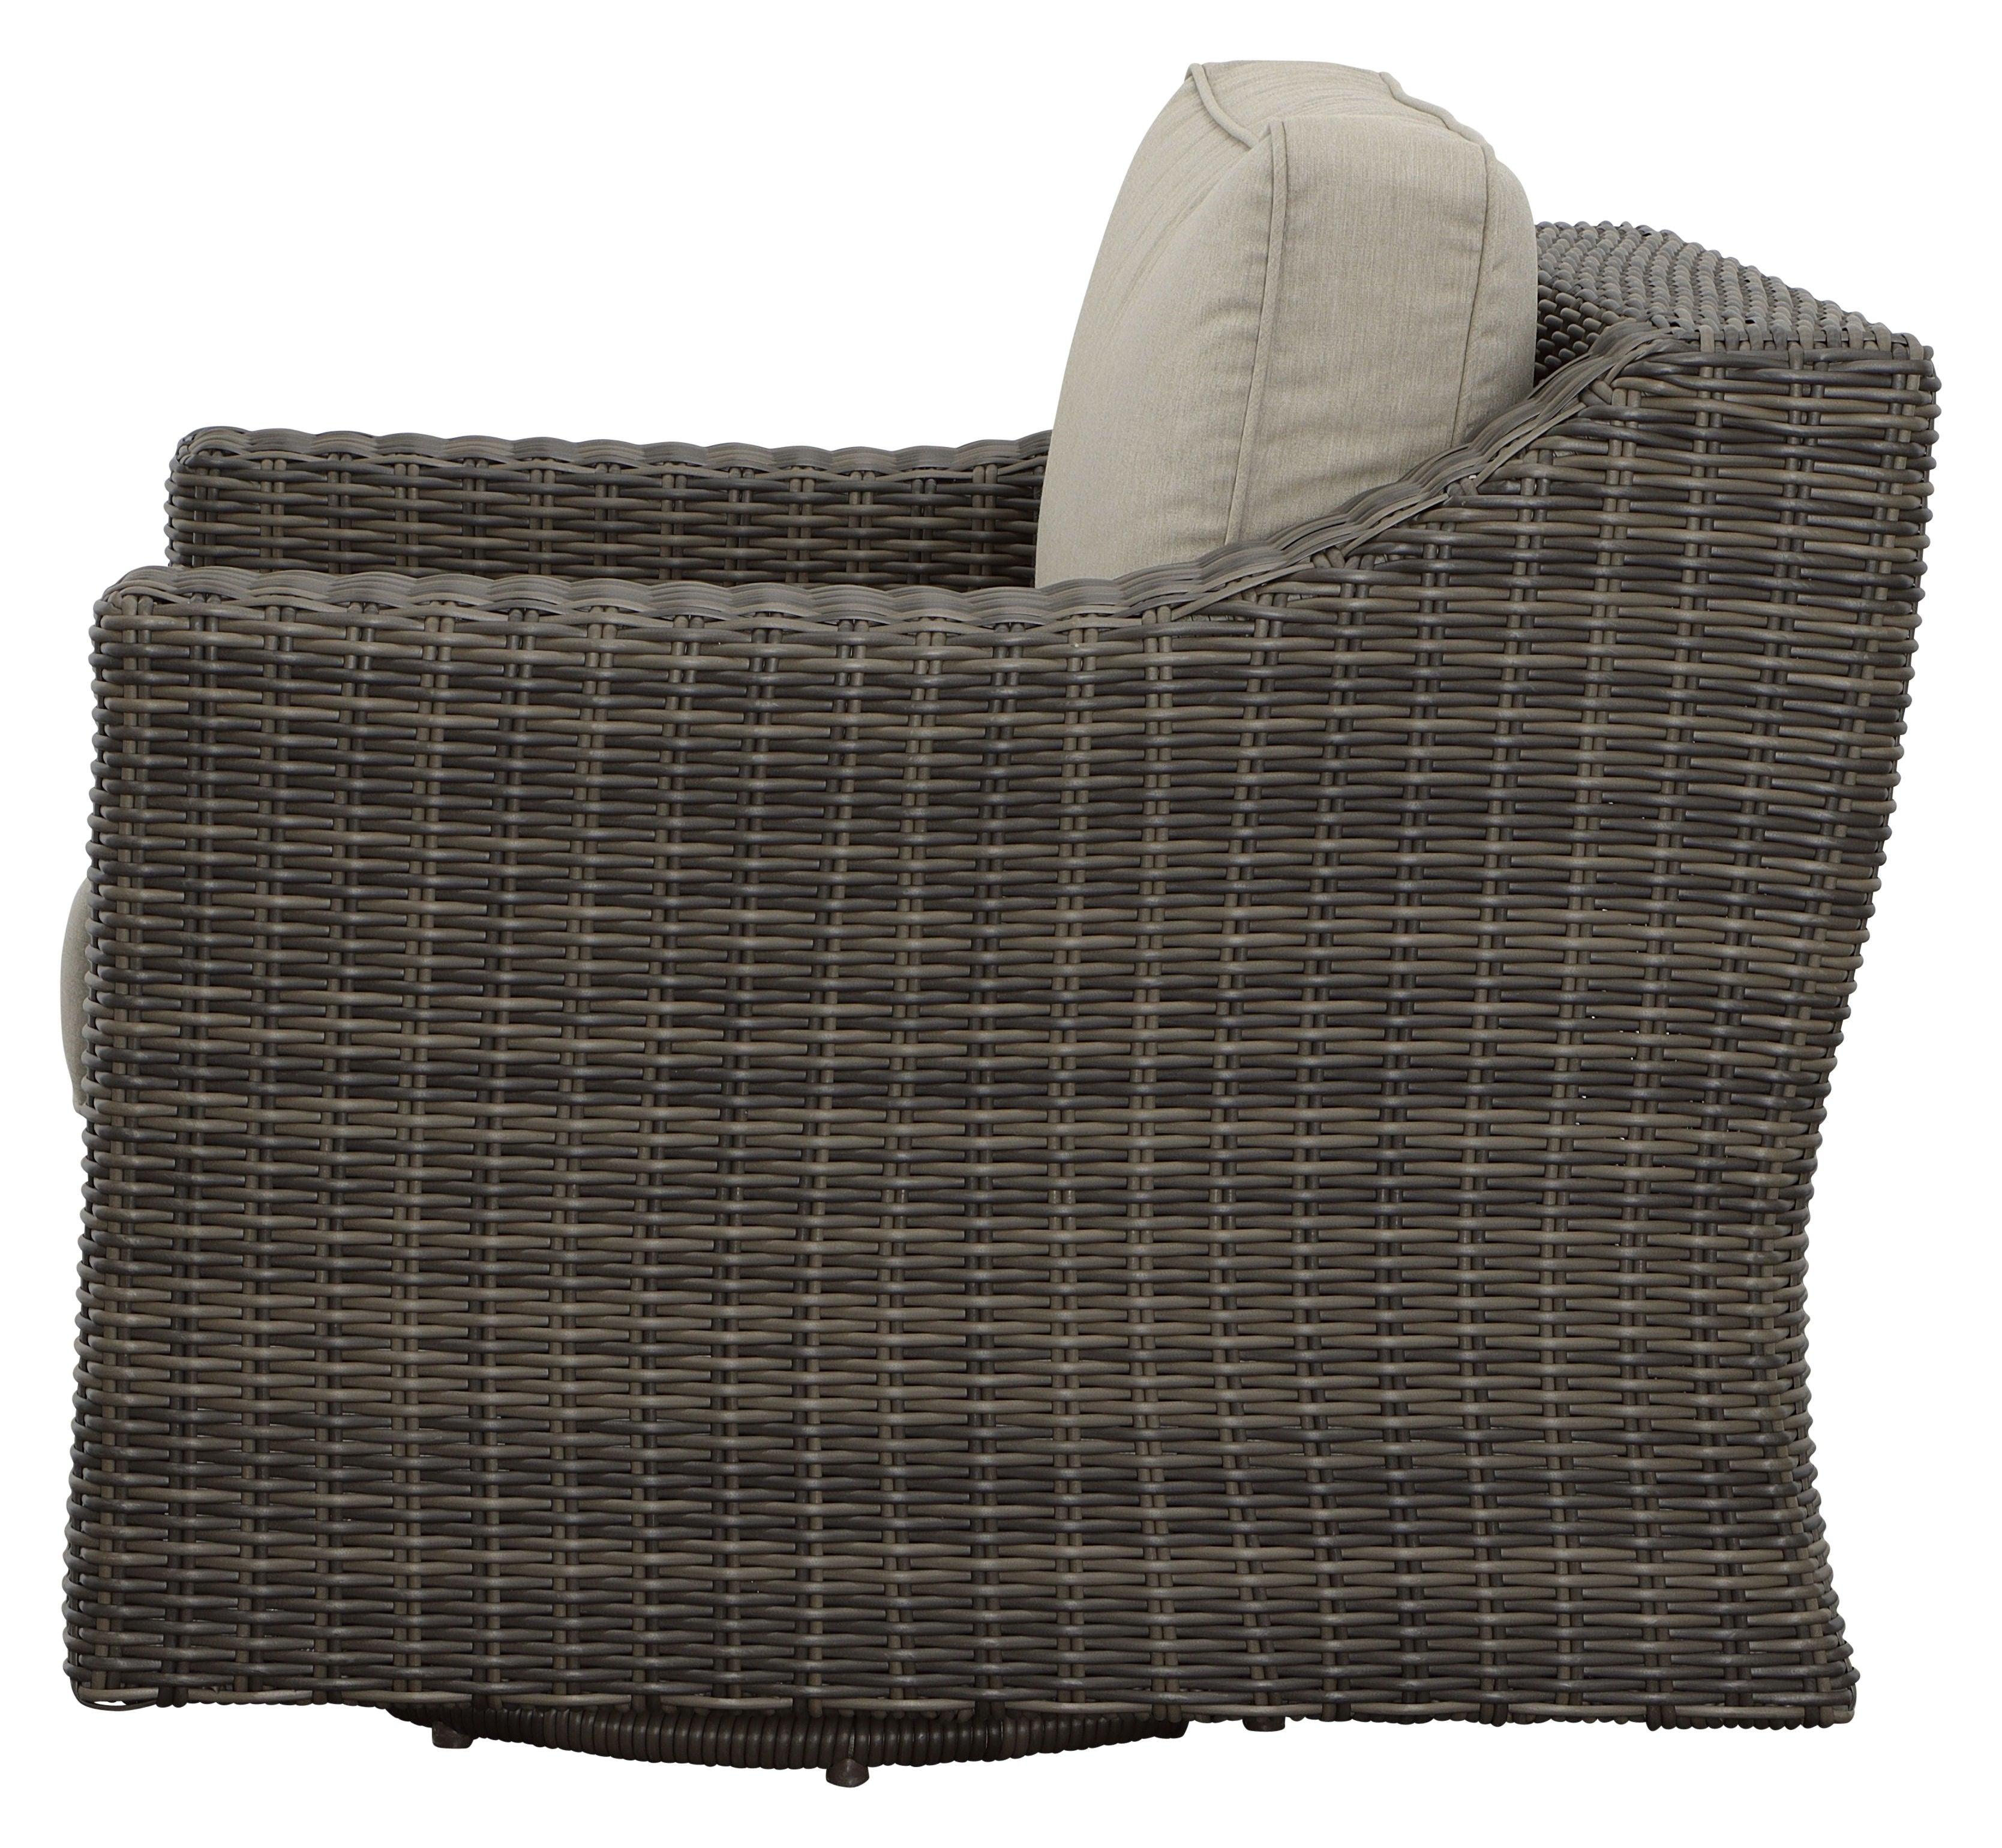 Steve Silver Furniture - Jones - Outdoor Swivel Lounge Chair (Set of 2) - Brown - 5th Avenue Furniture